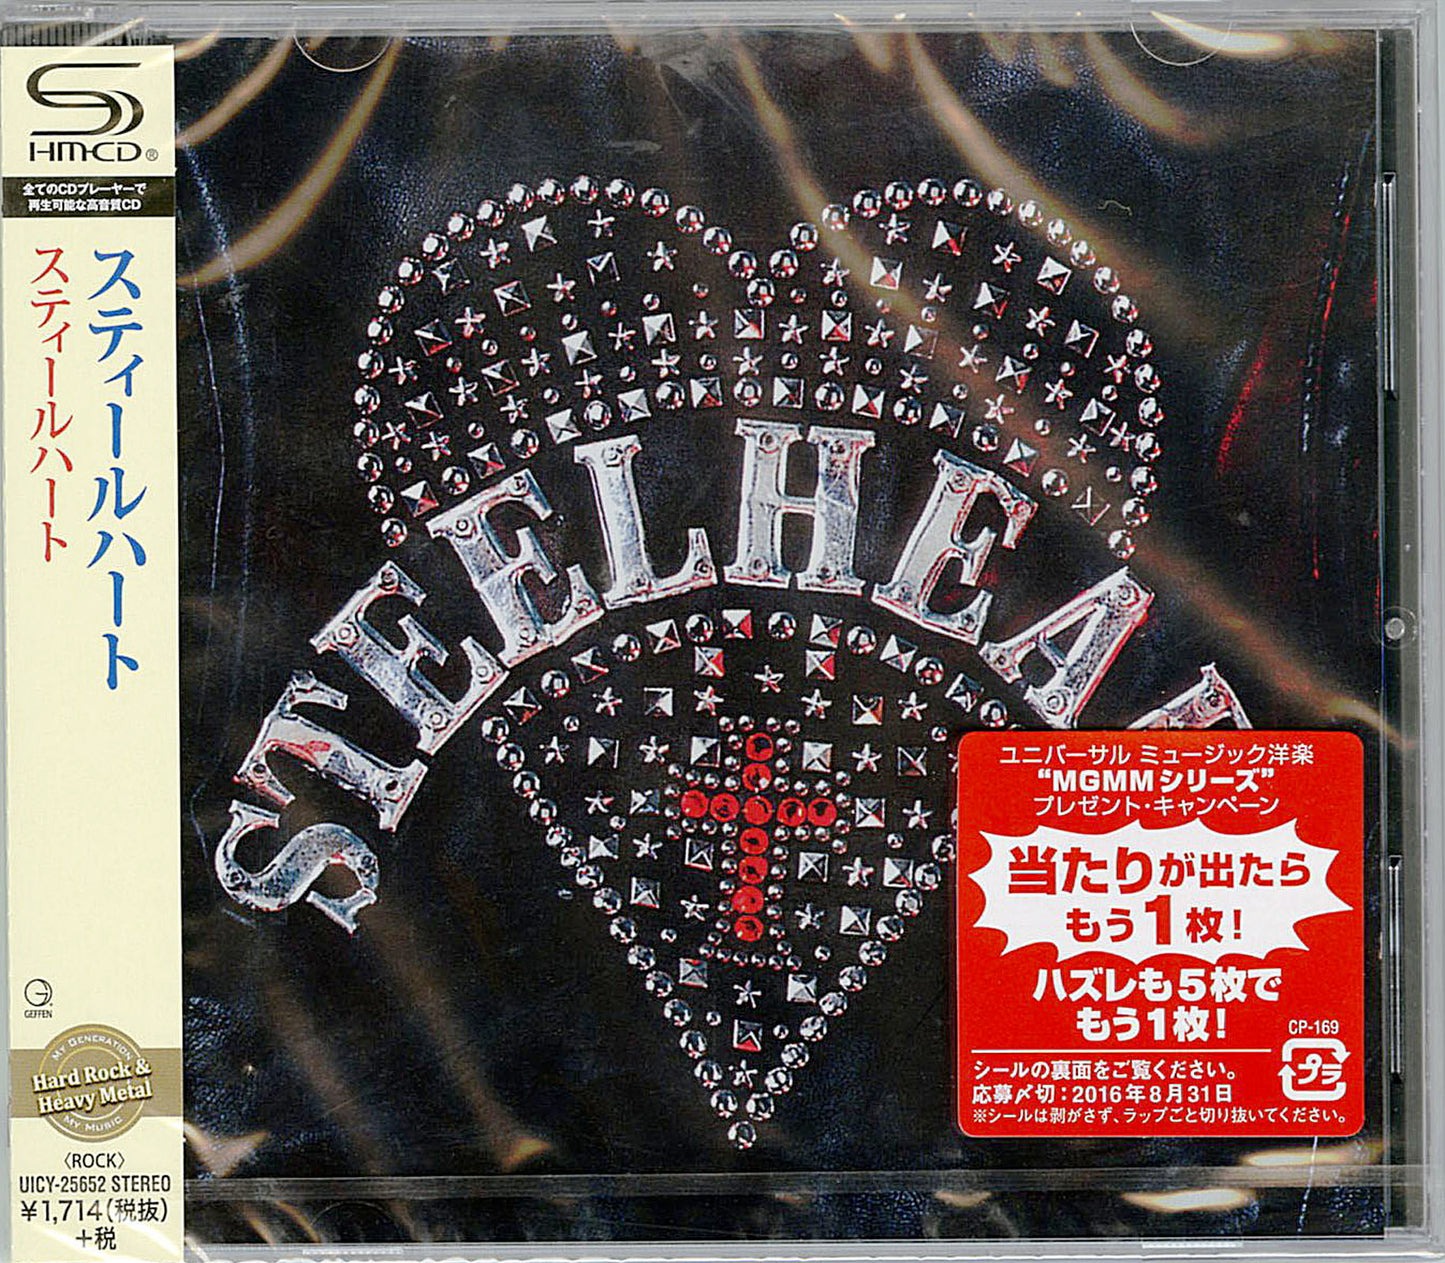 Steelheart - S/T - Japan  SHM-CD Bonus Track